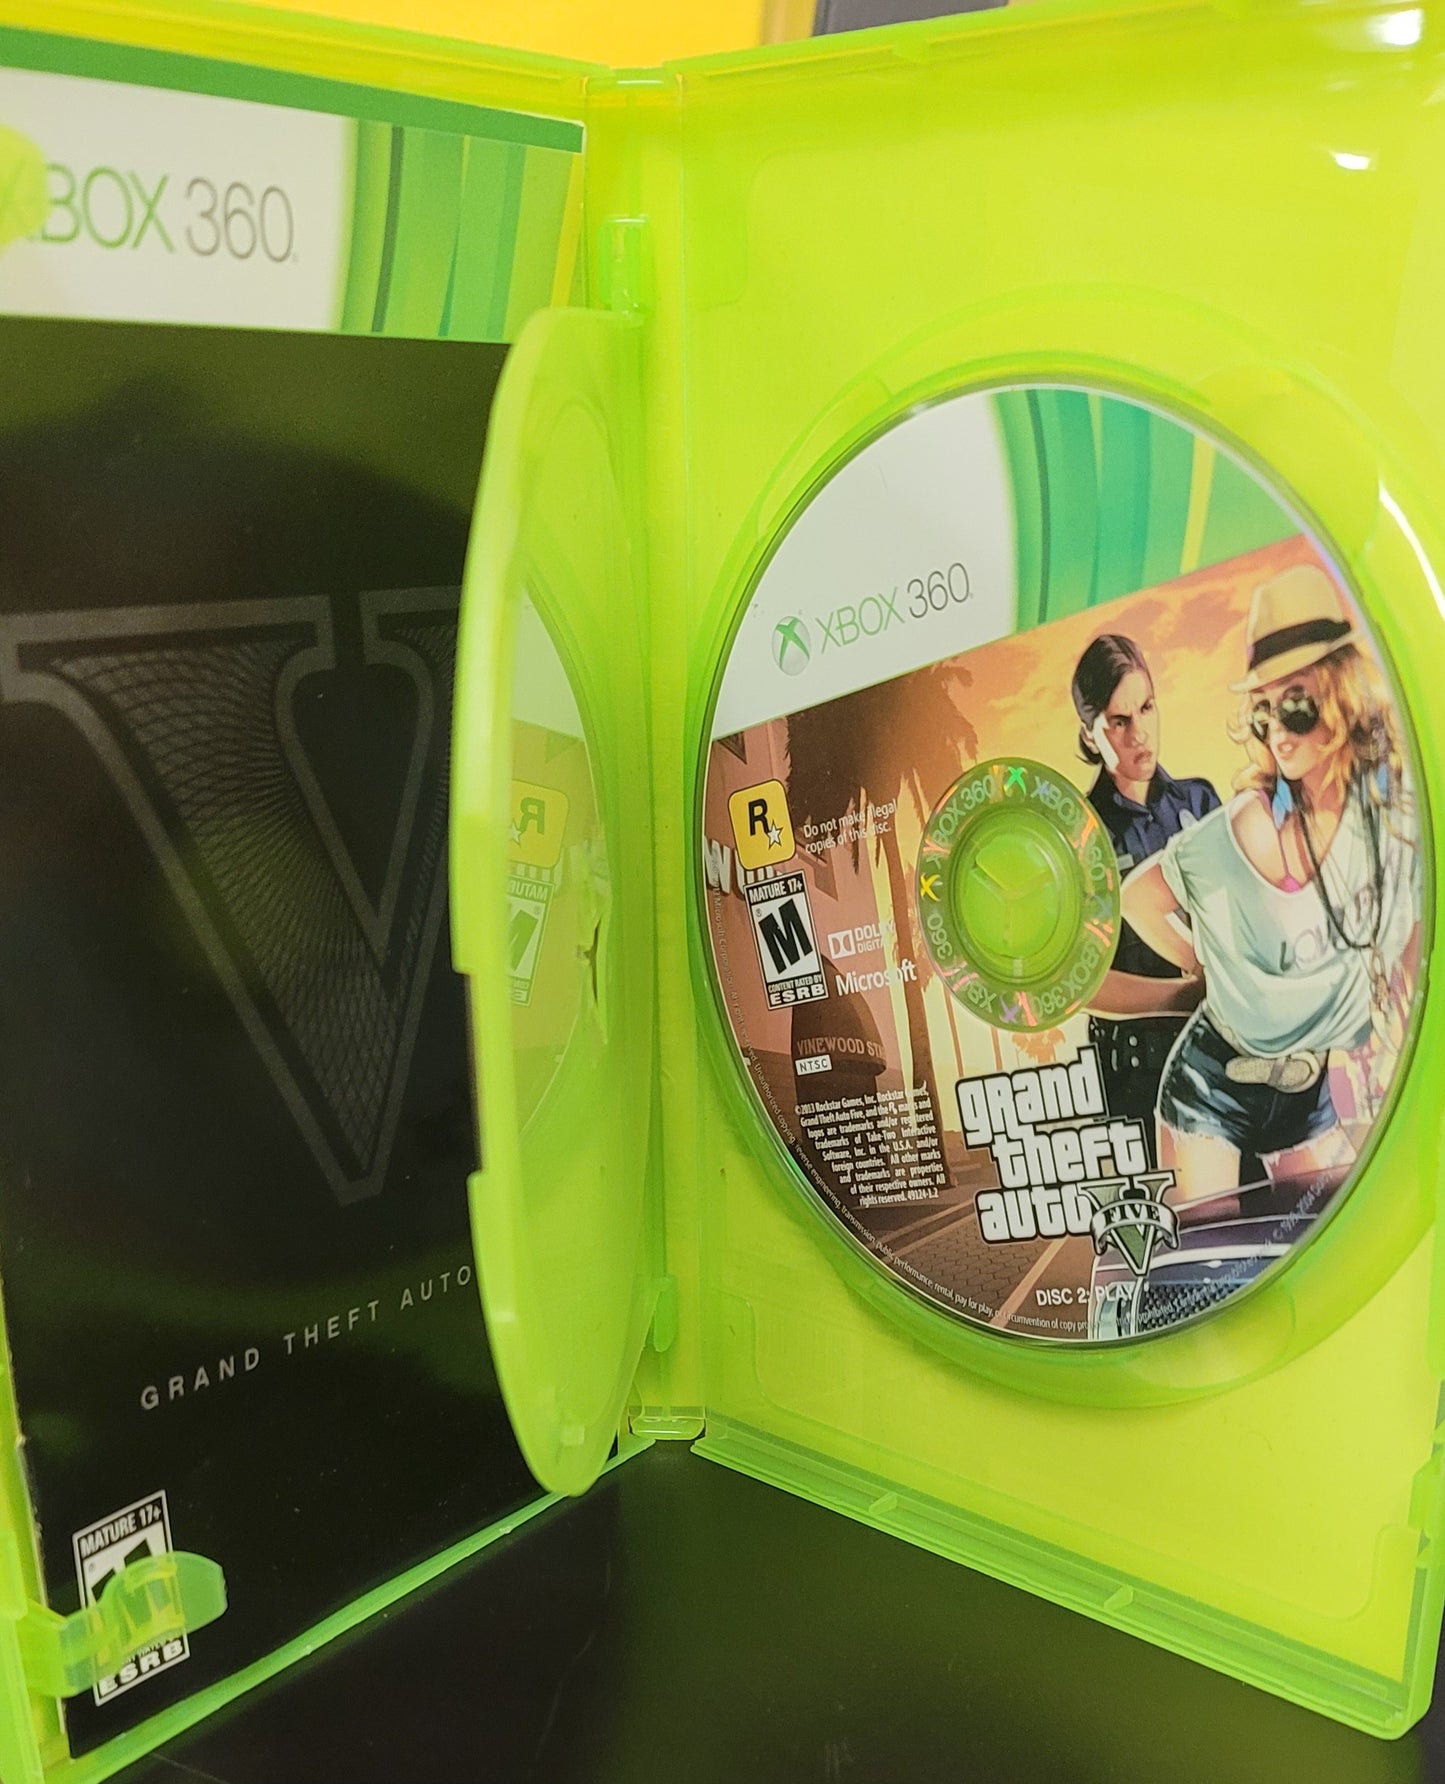 Grand Theft Auto 5 - Xb360 - Used